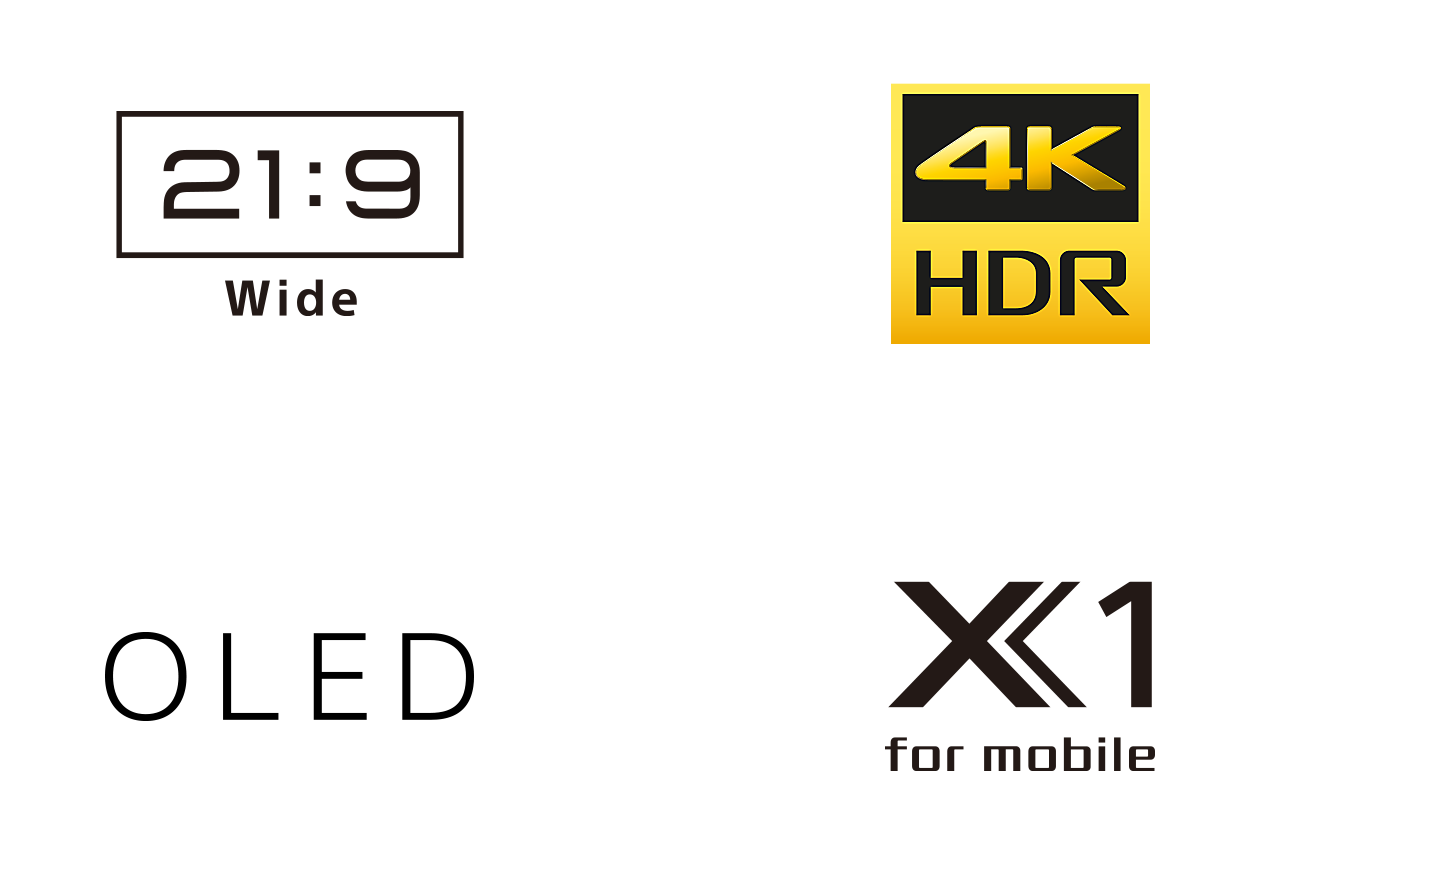 Logos grand écran 21:9, 4kHDR, OLED et X1 for mobile